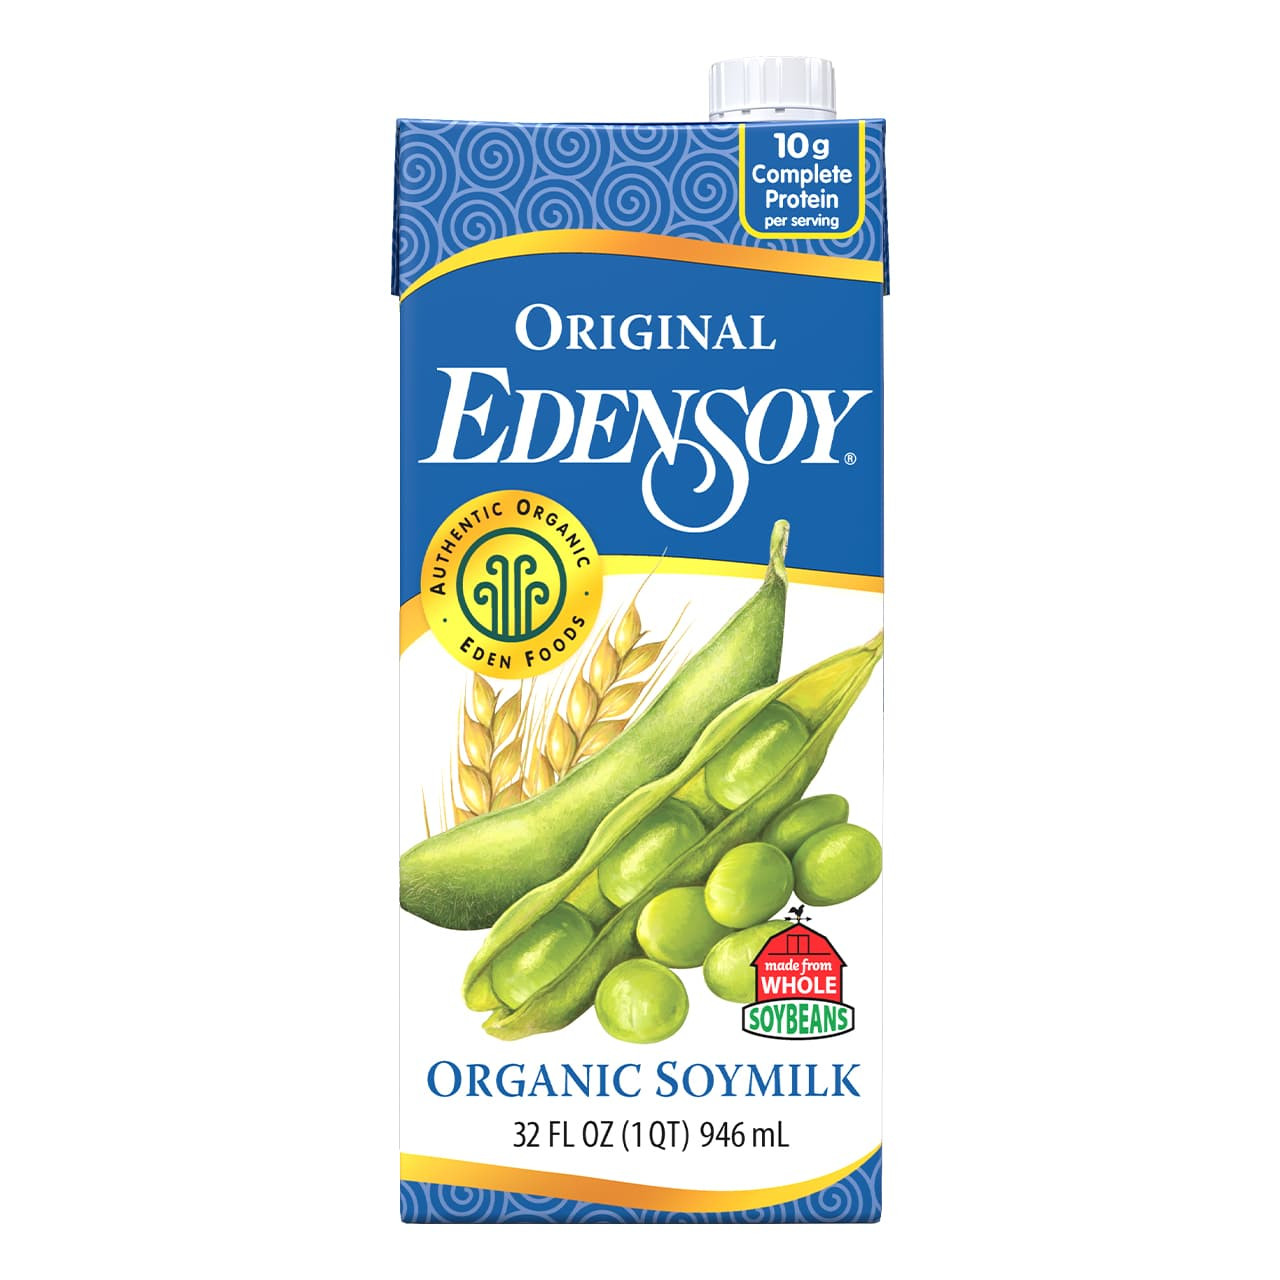 Original Edensoy, organic